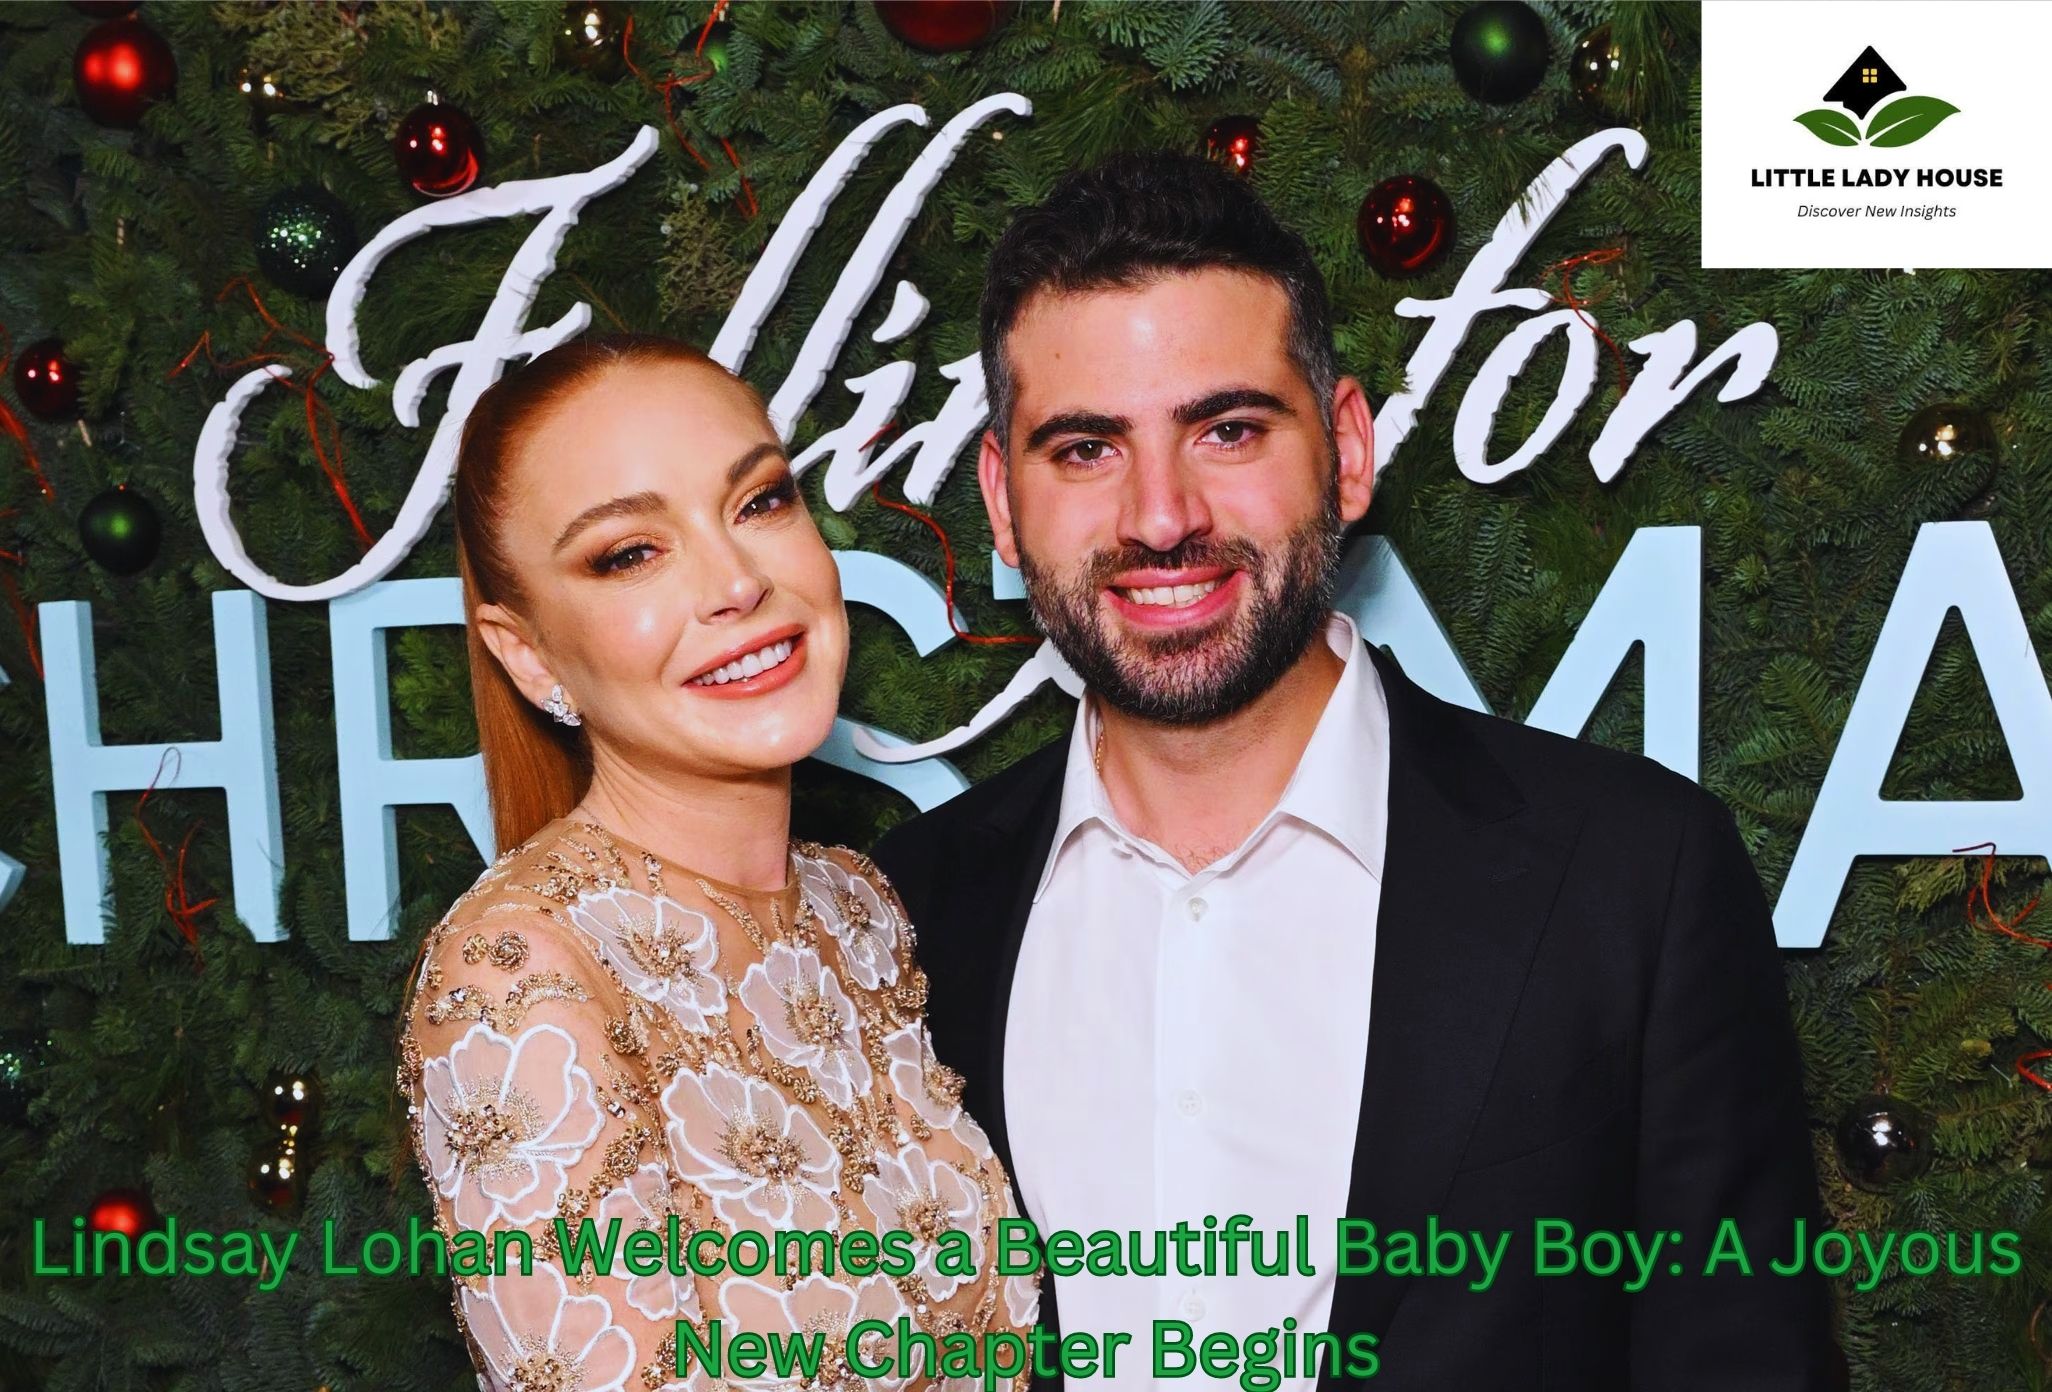 Lindsay Lohan Welcomes a Beautiful Baby Boy